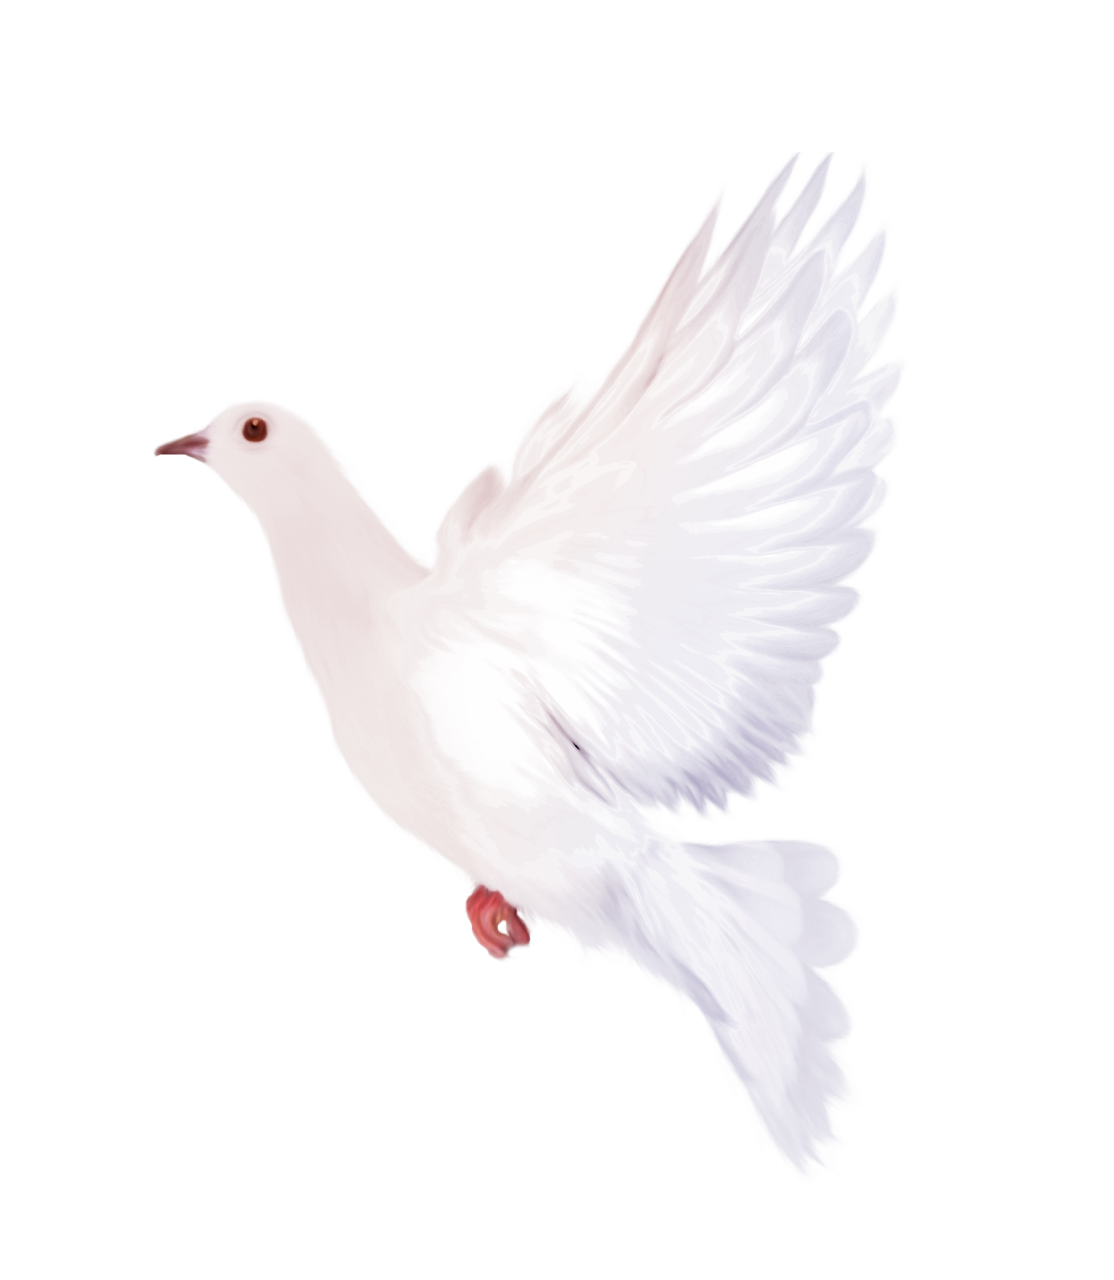 White dove gallery yopriceville. Pigeon clipart bird migration